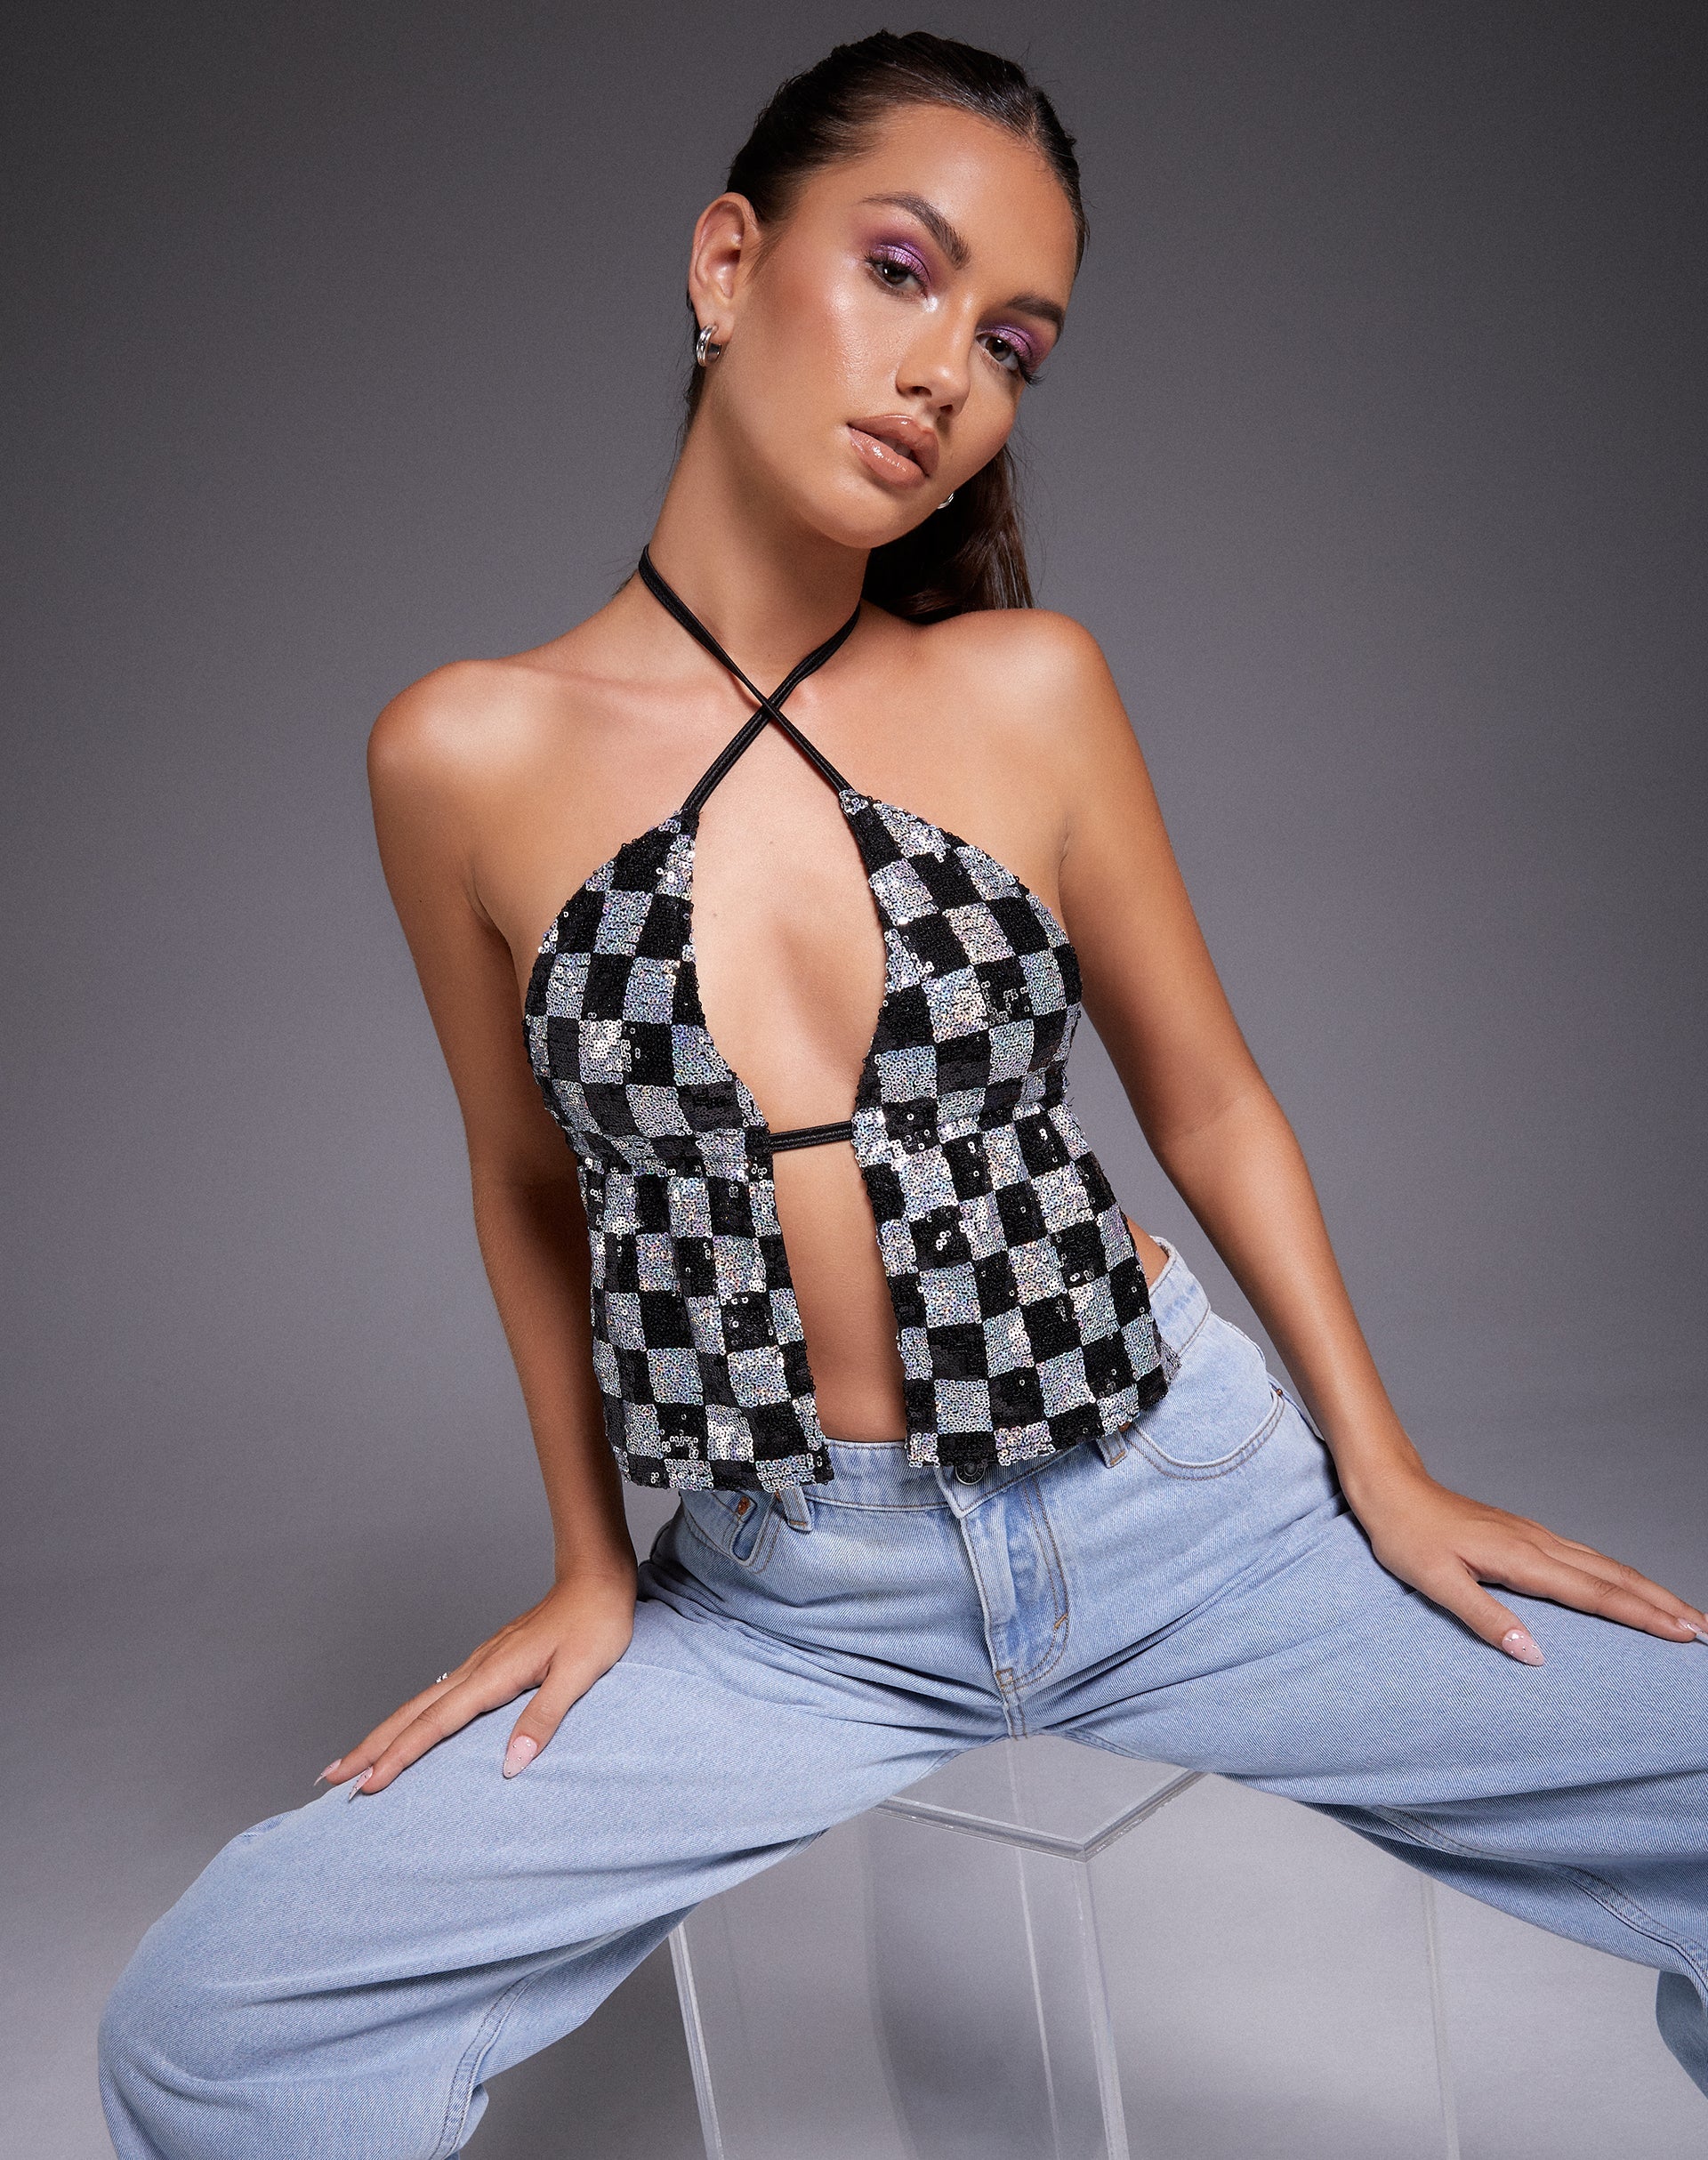 Image of Runita Top in Checkerboard Sequin Black and Silver